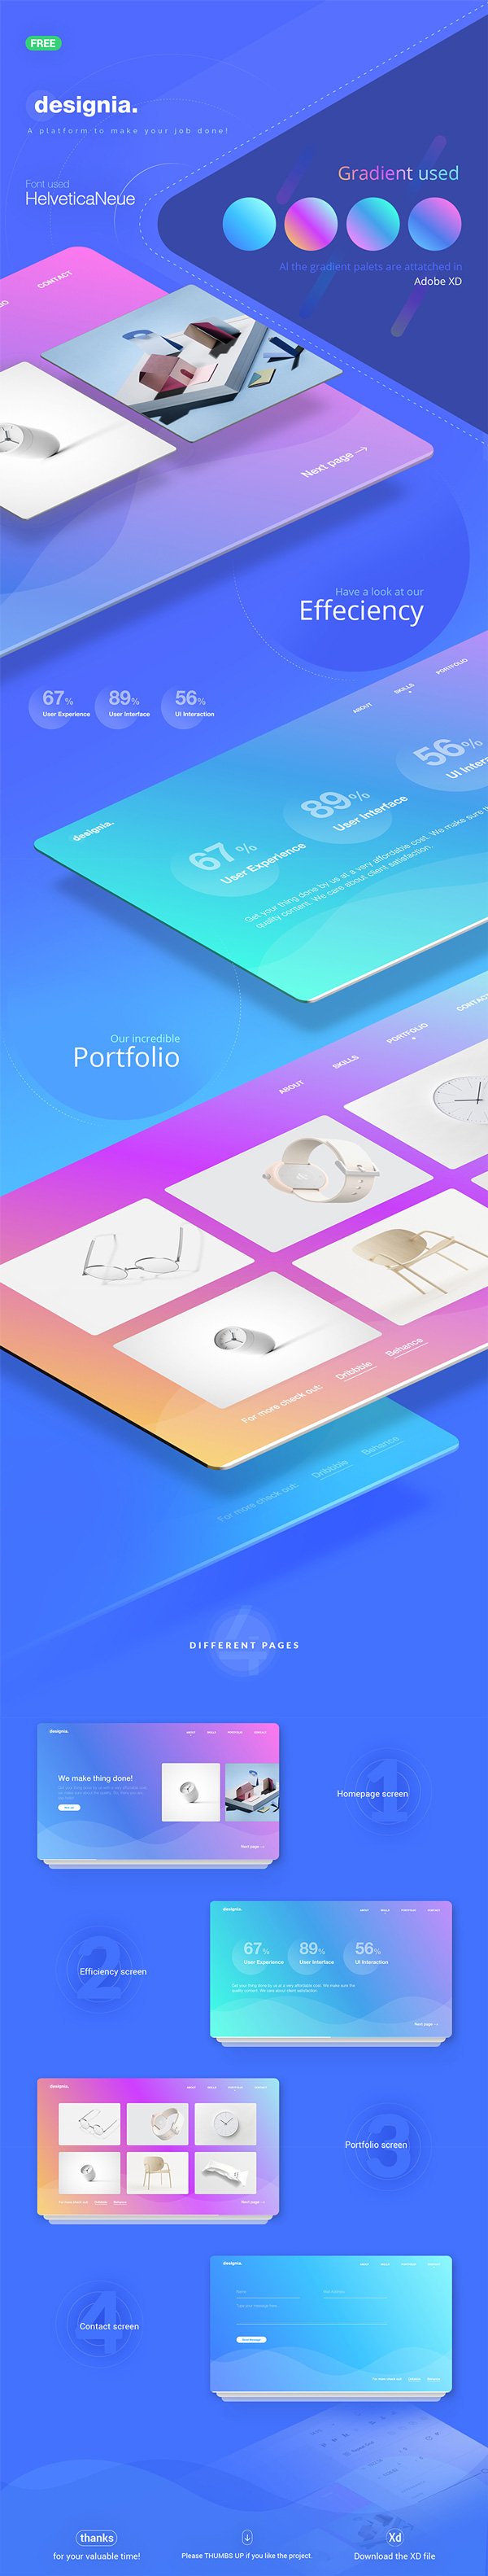 Free-Design-Agency-Landing-Page-Concept-UI-Kit-2018